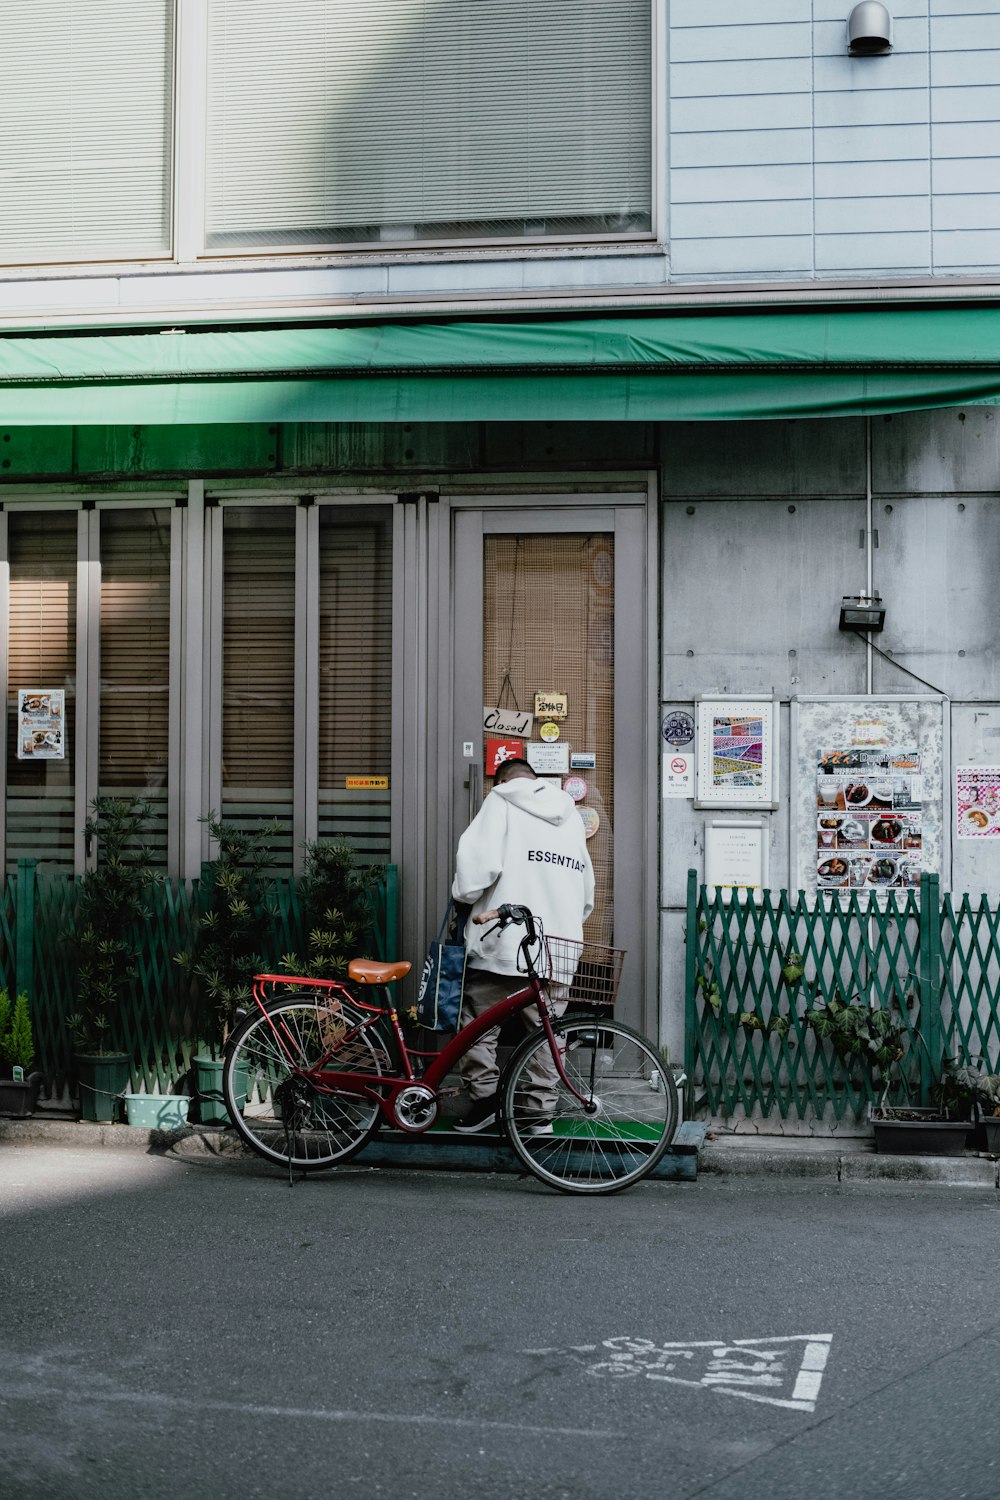 a man standing next to a bike on a street